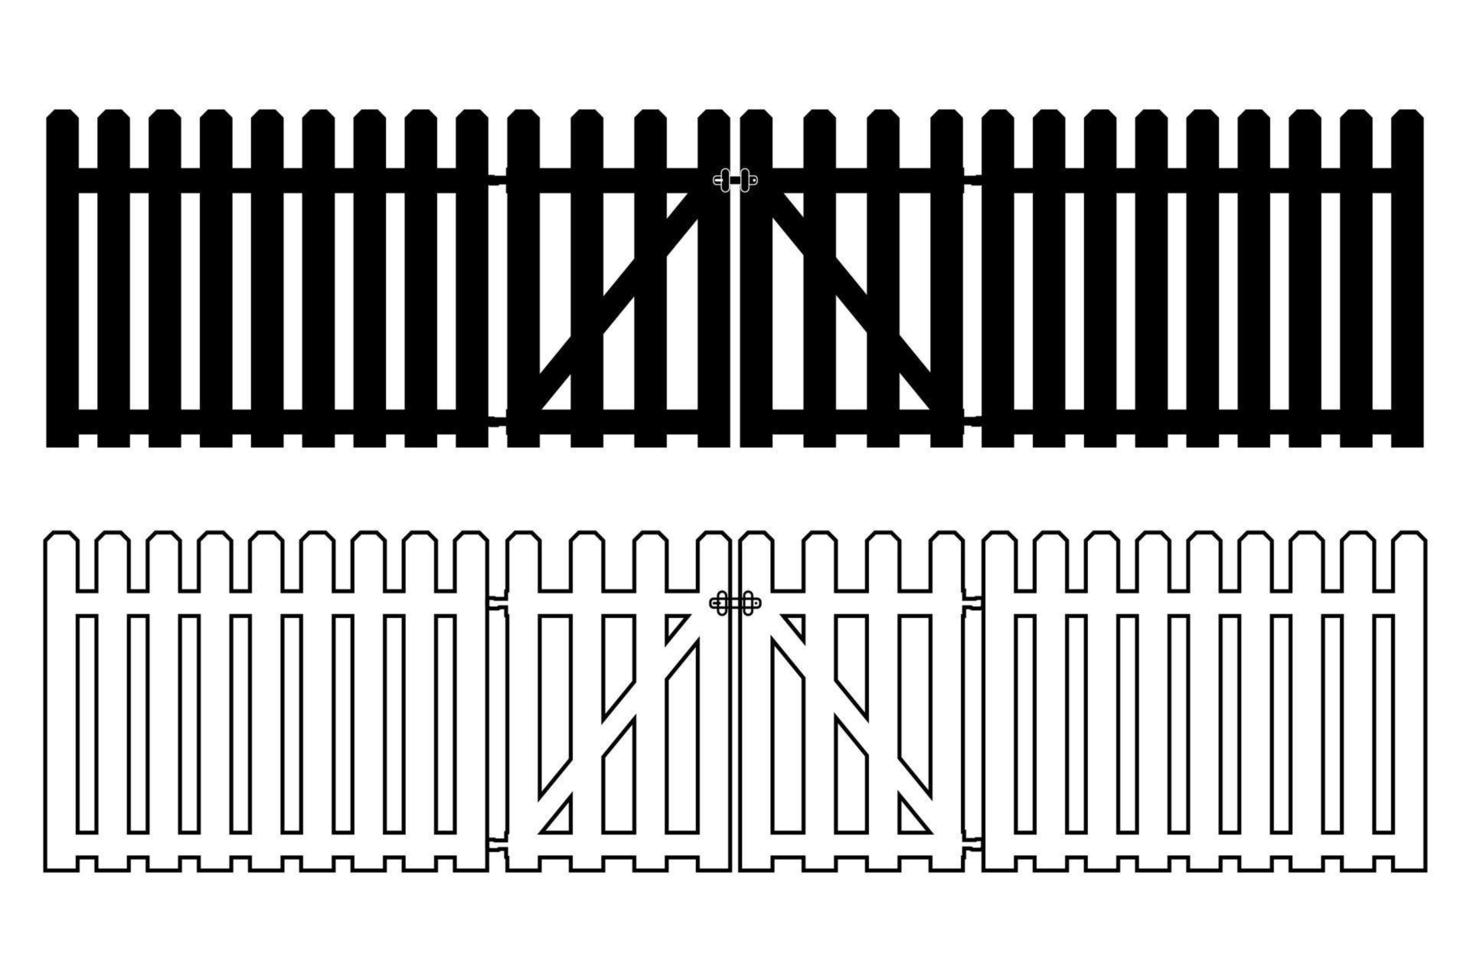 piket hek silhouet, houten hek deur ingang illustratie. vector